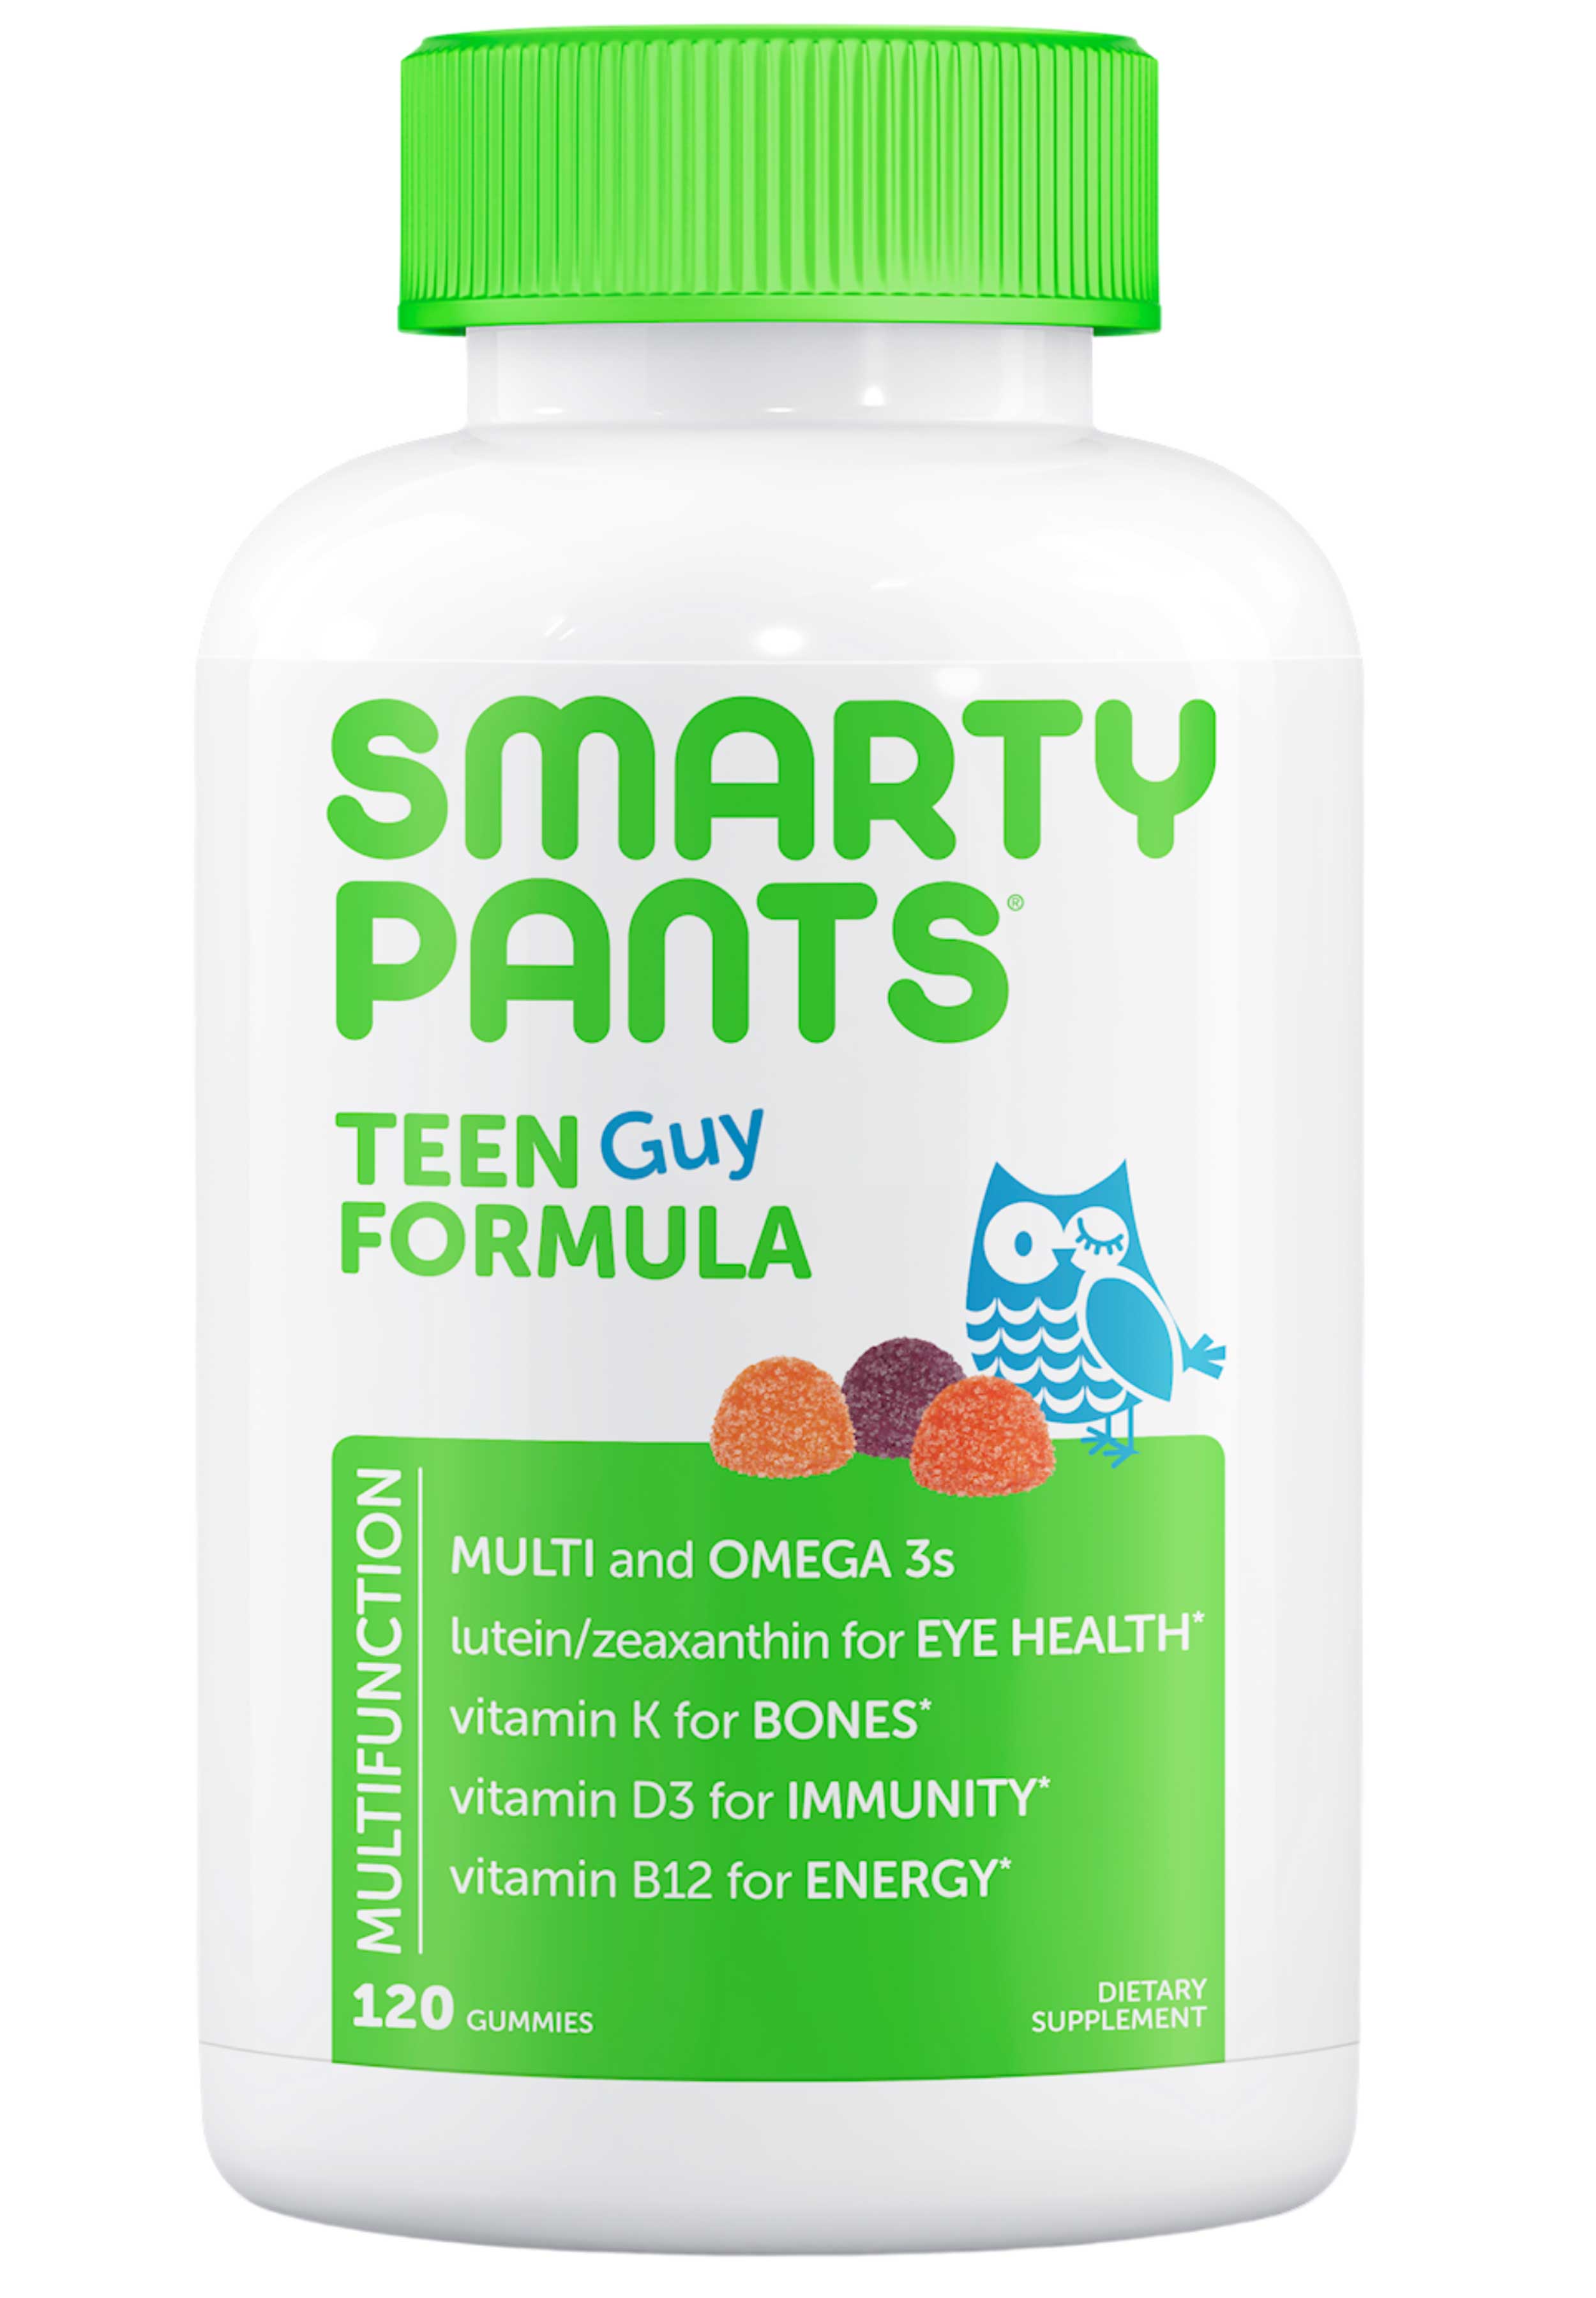 SmartyPants Teen Guy Formula